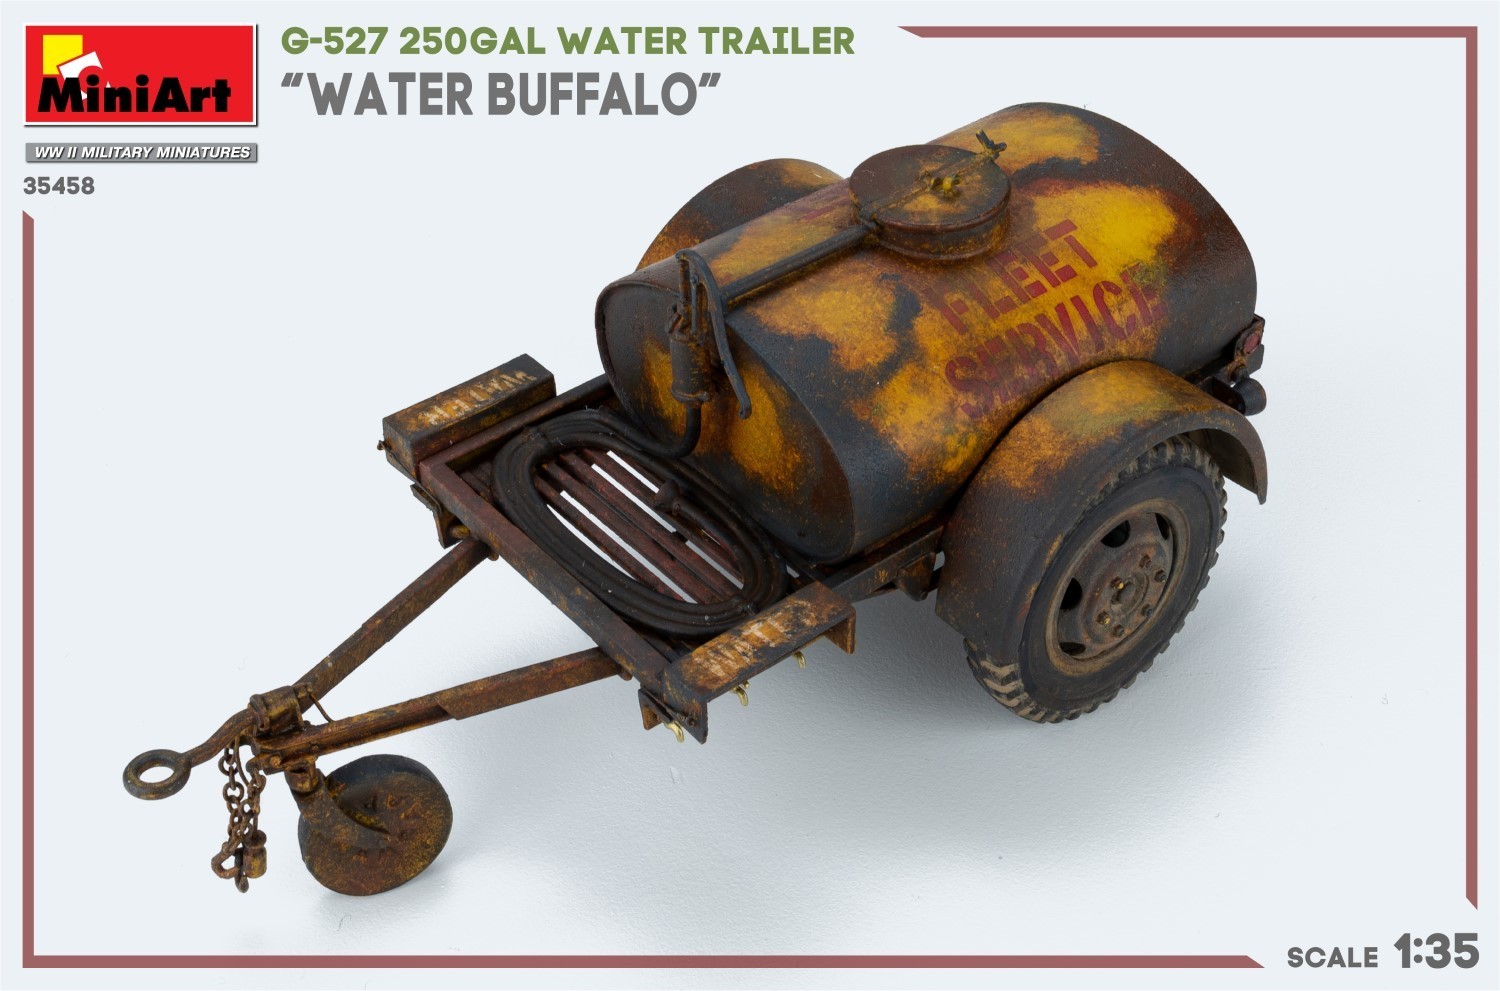 MiniArt G-527 250GAL Water Trailer “Water Buffalo” Rust Paint-6